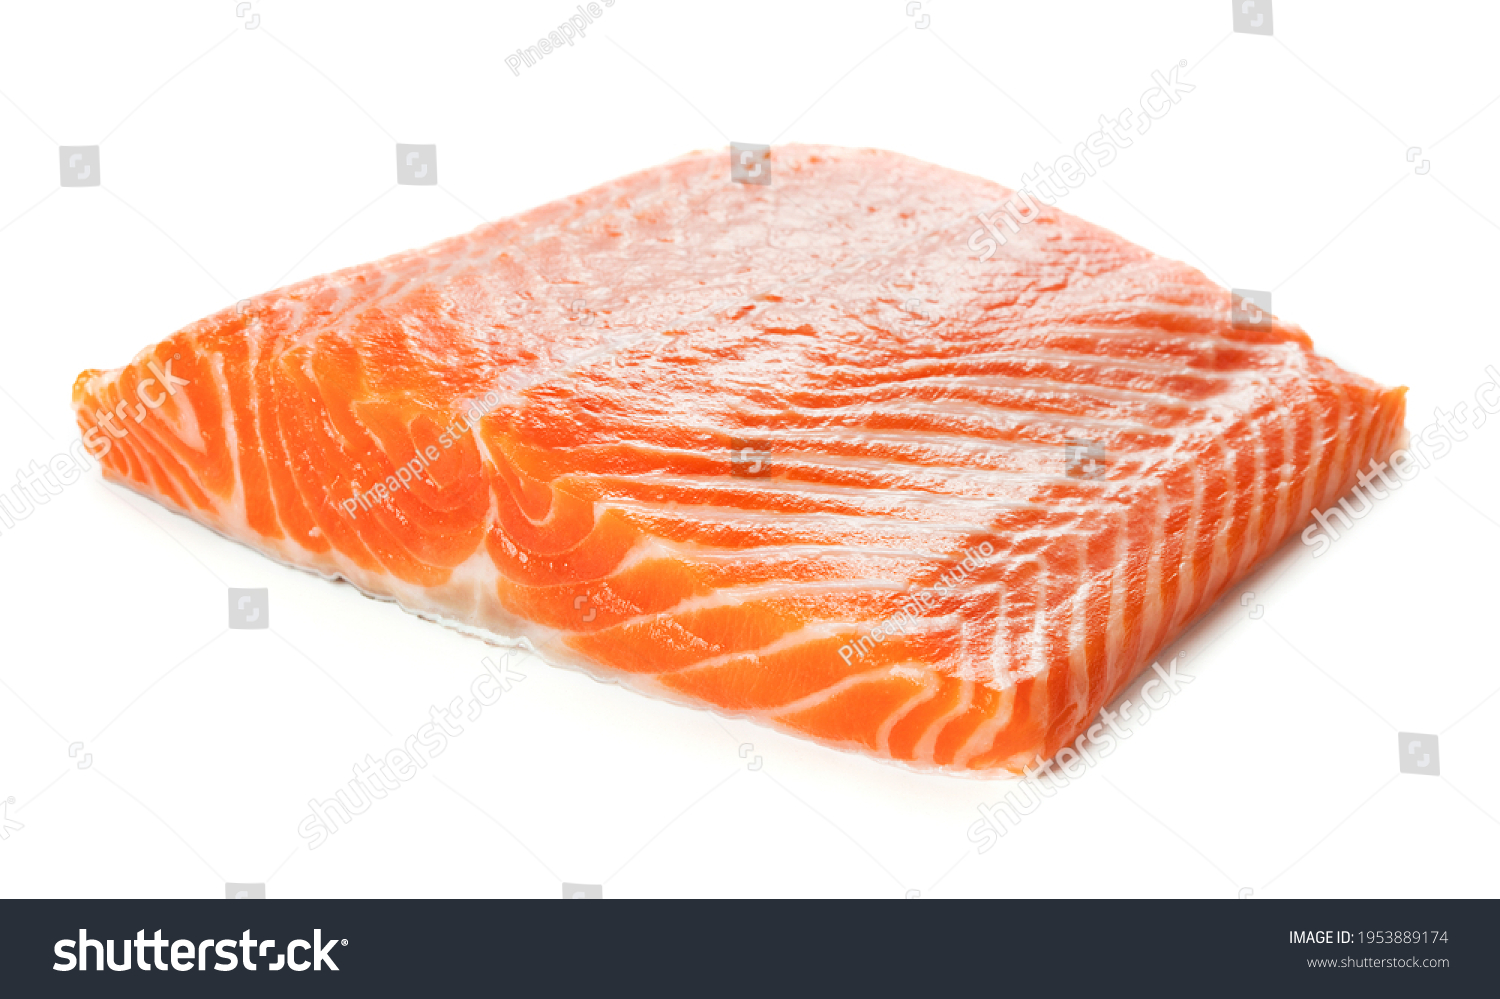 627 Salomon fish Images, Stock Photos & Vectors | Shutterstock